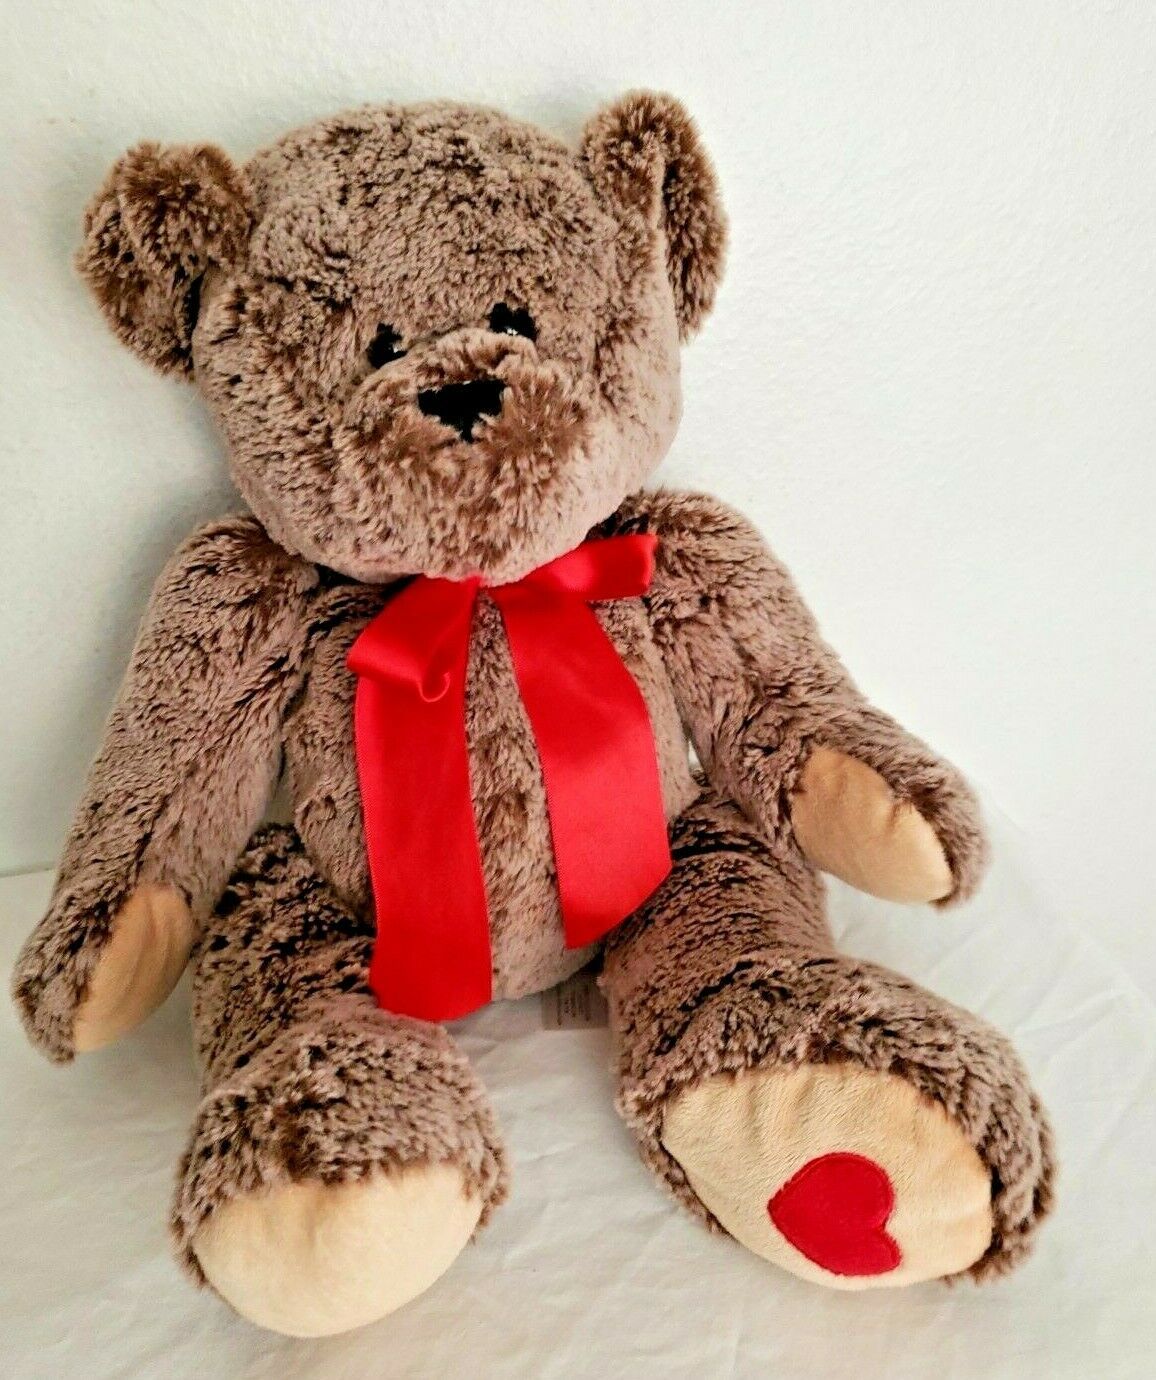 Primary image for 2015 Animal Adventure Teddy Bear Plush Stuffed Animal Brown Tan Red Heart